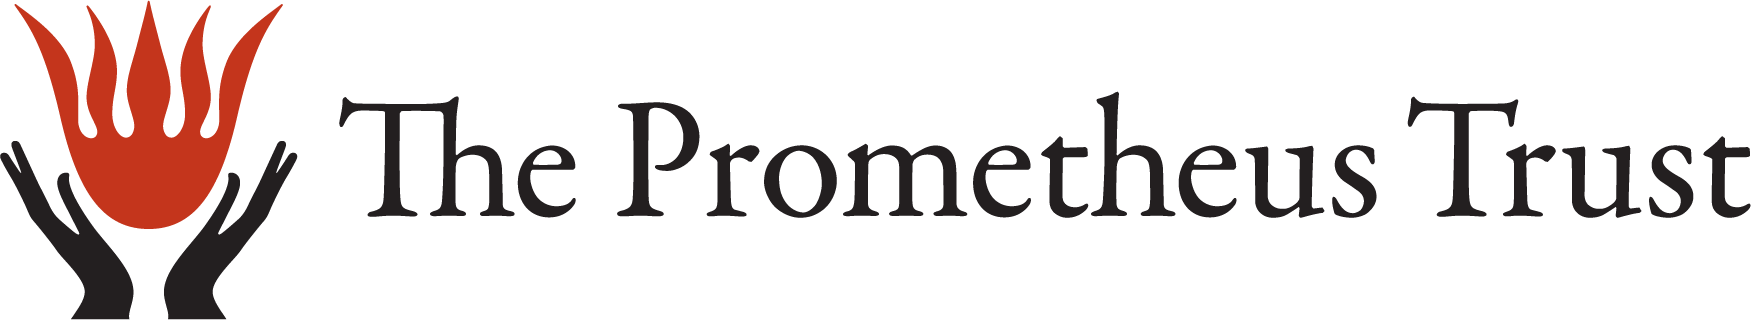 The Prometheus Trust logo